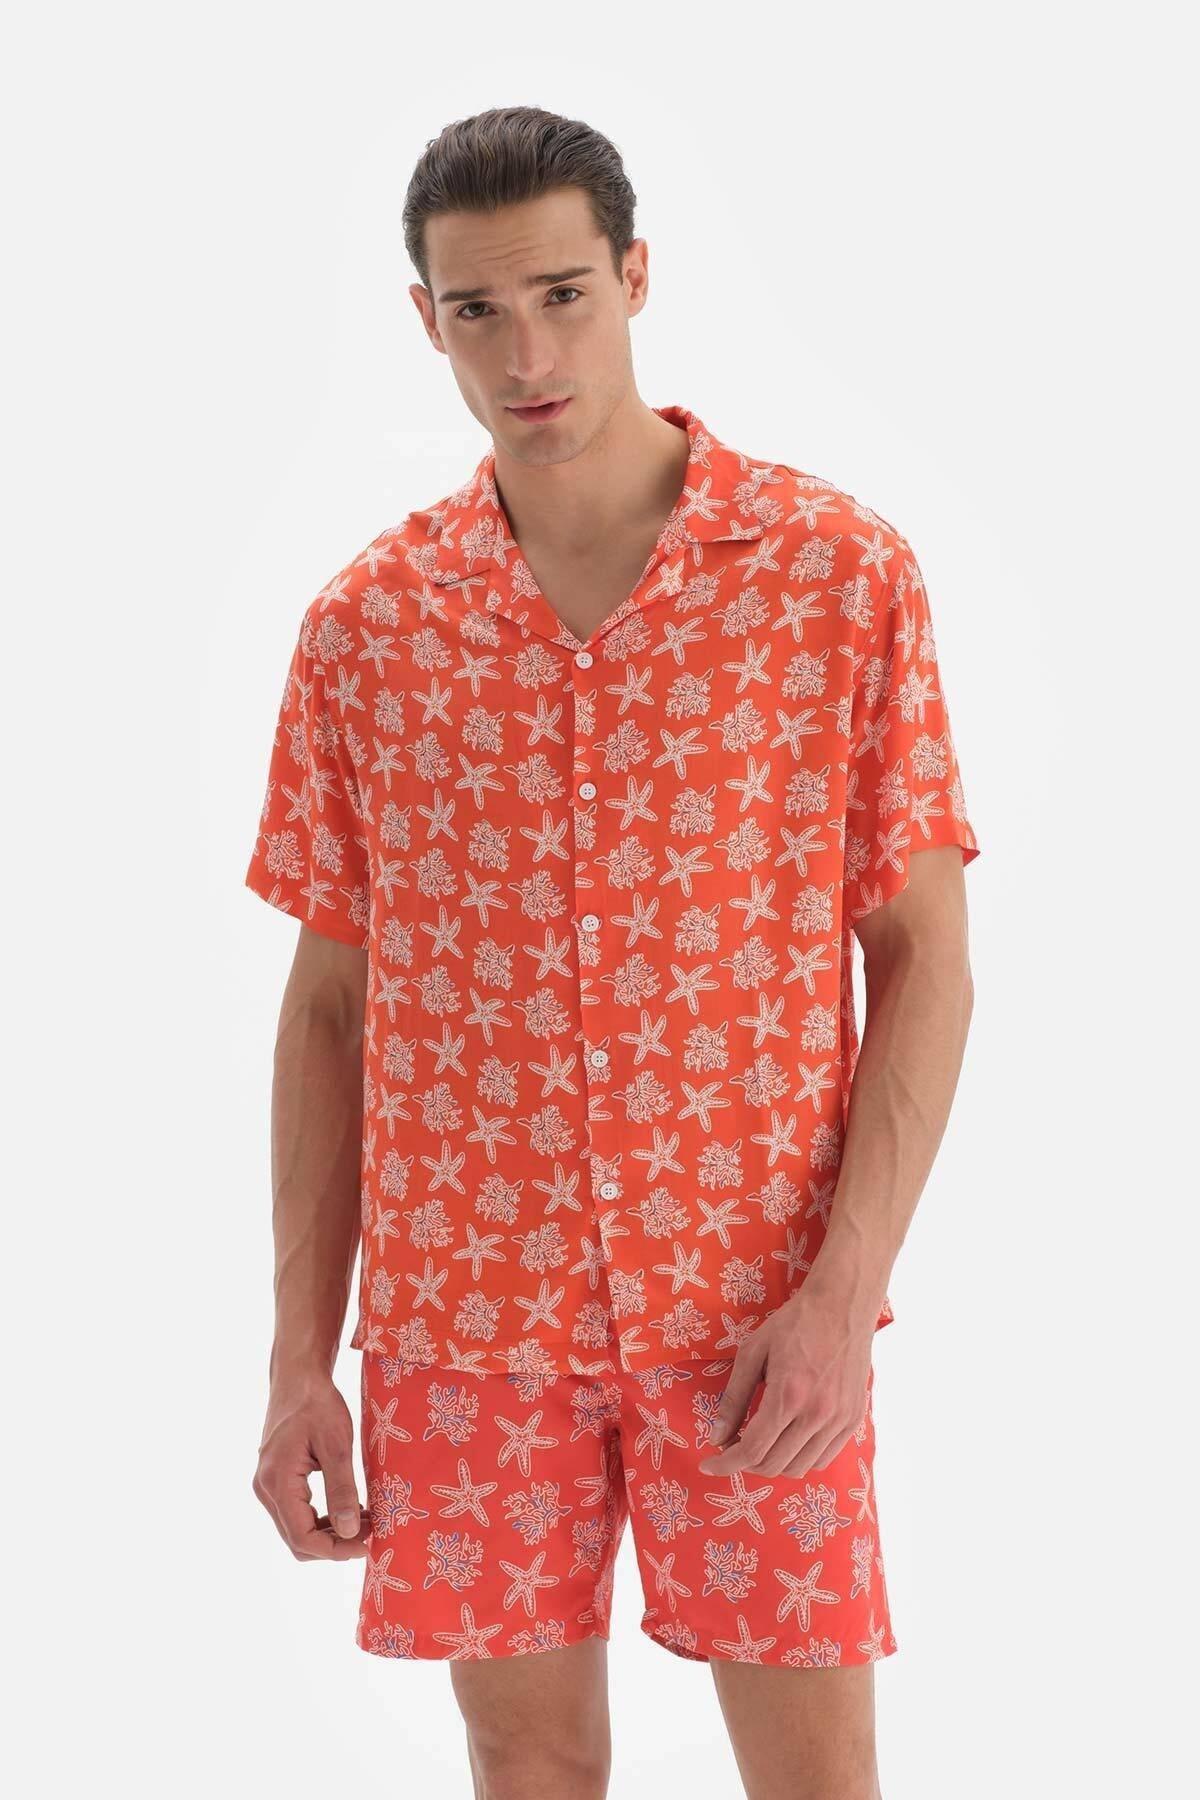 Dagi - Orange Printed Short Sleeves Shirts